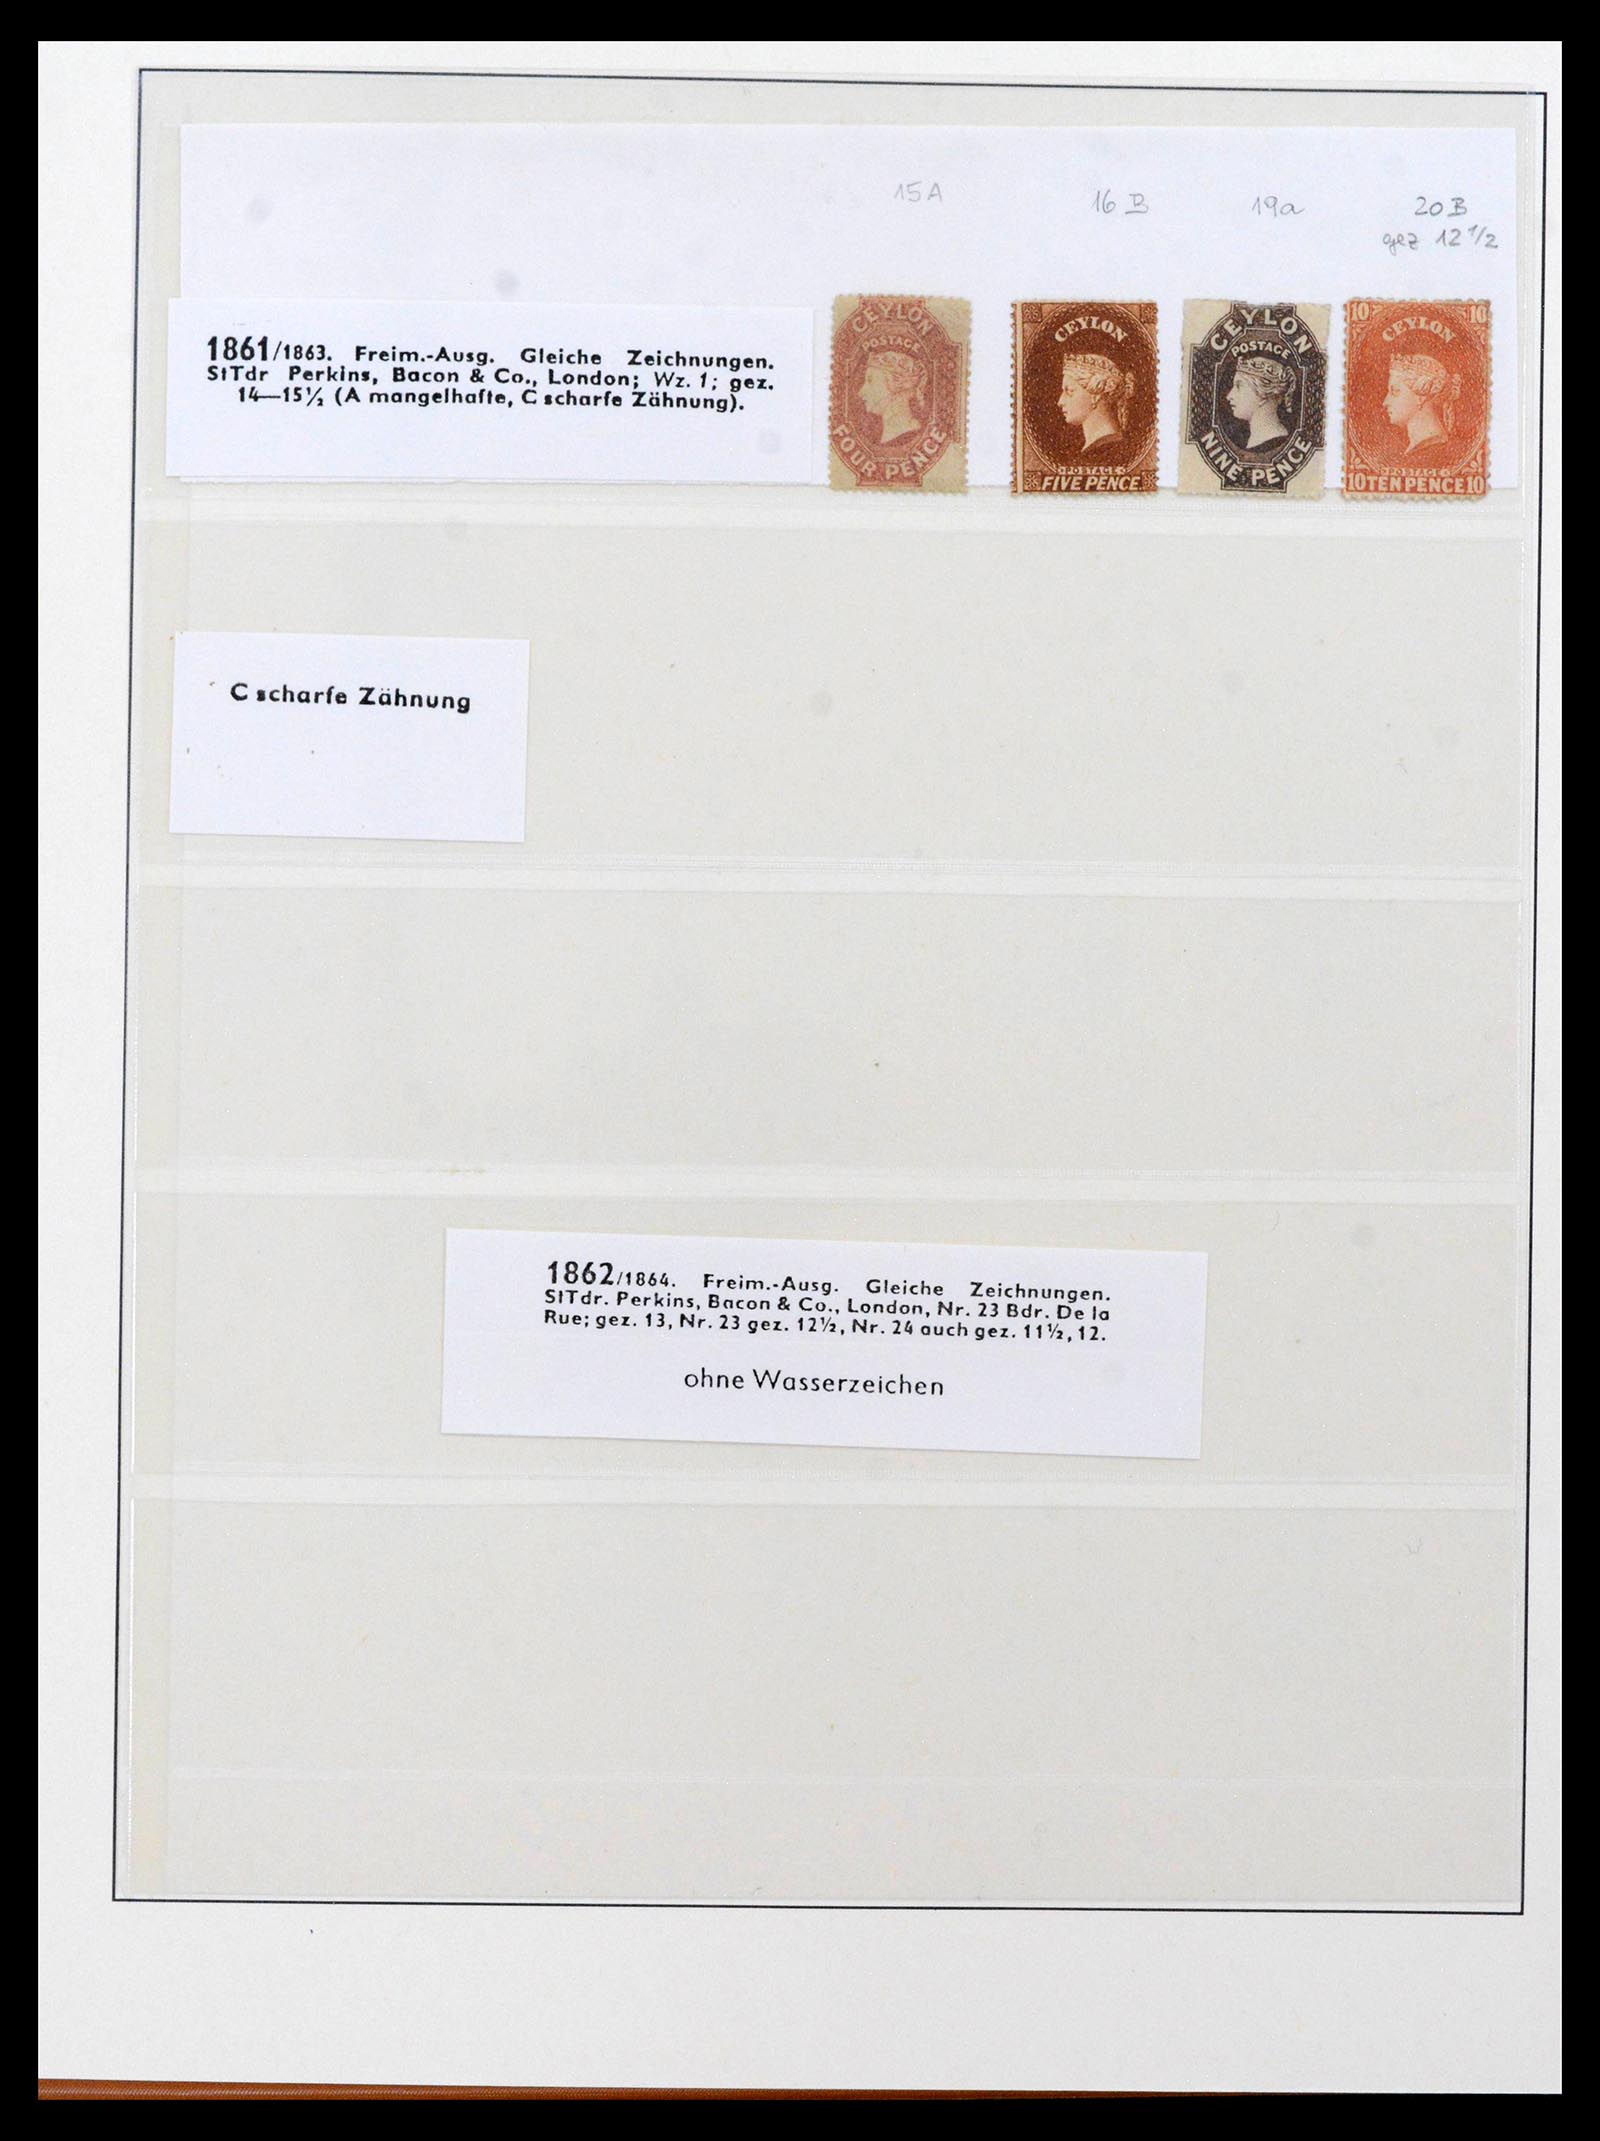 39003 0002 - Stamp collection 39003 Ceylon/Sri Lanka 1857-2003.